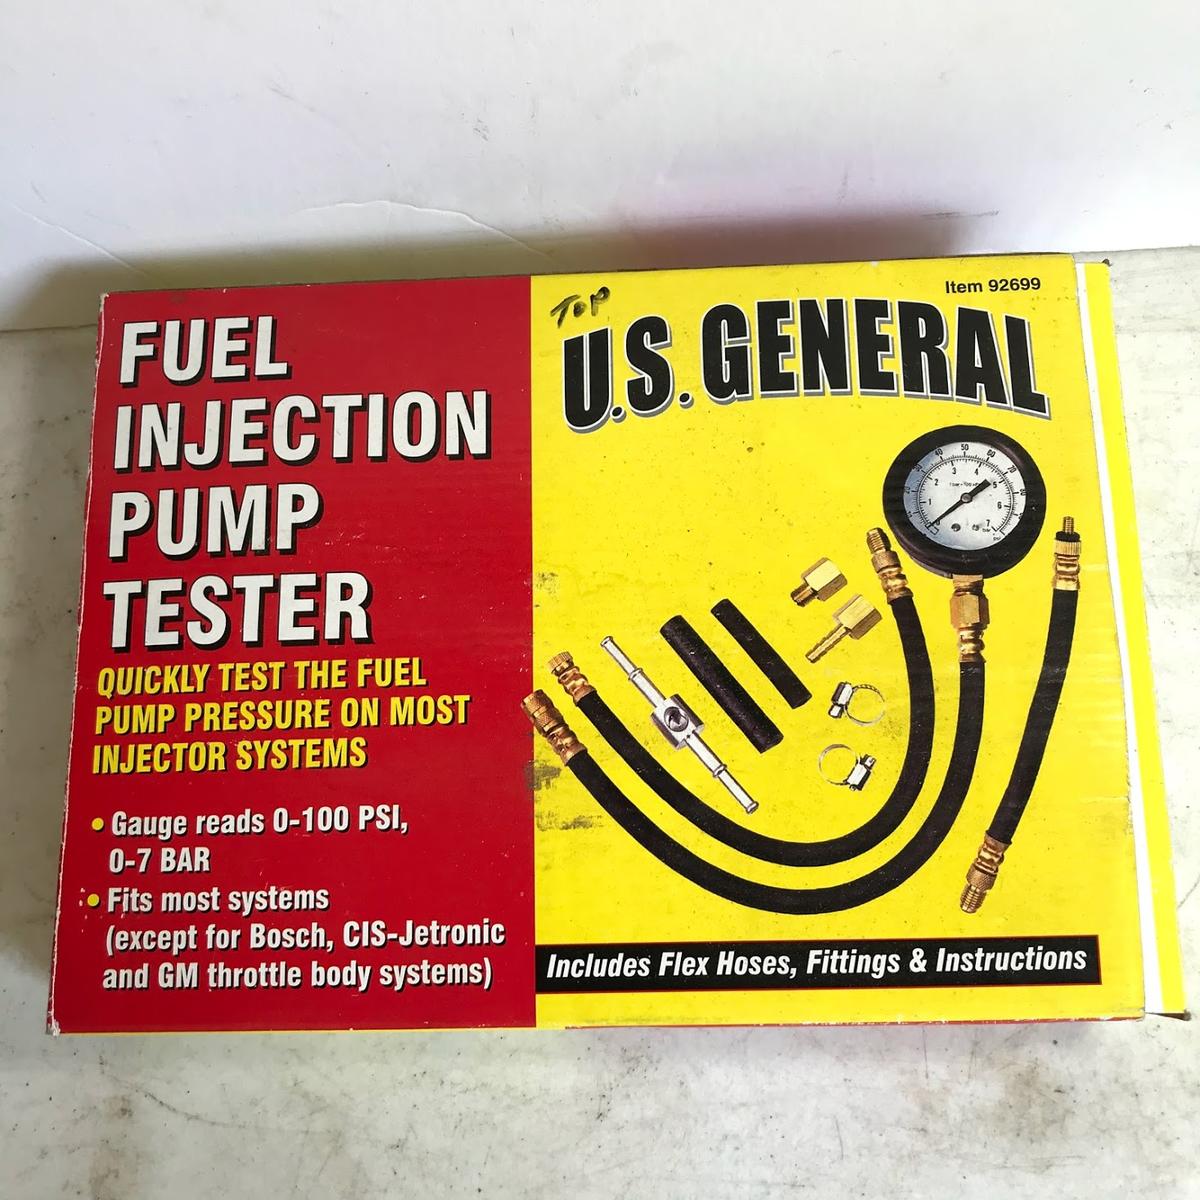 U.S General Fuel Injection Pump Tester